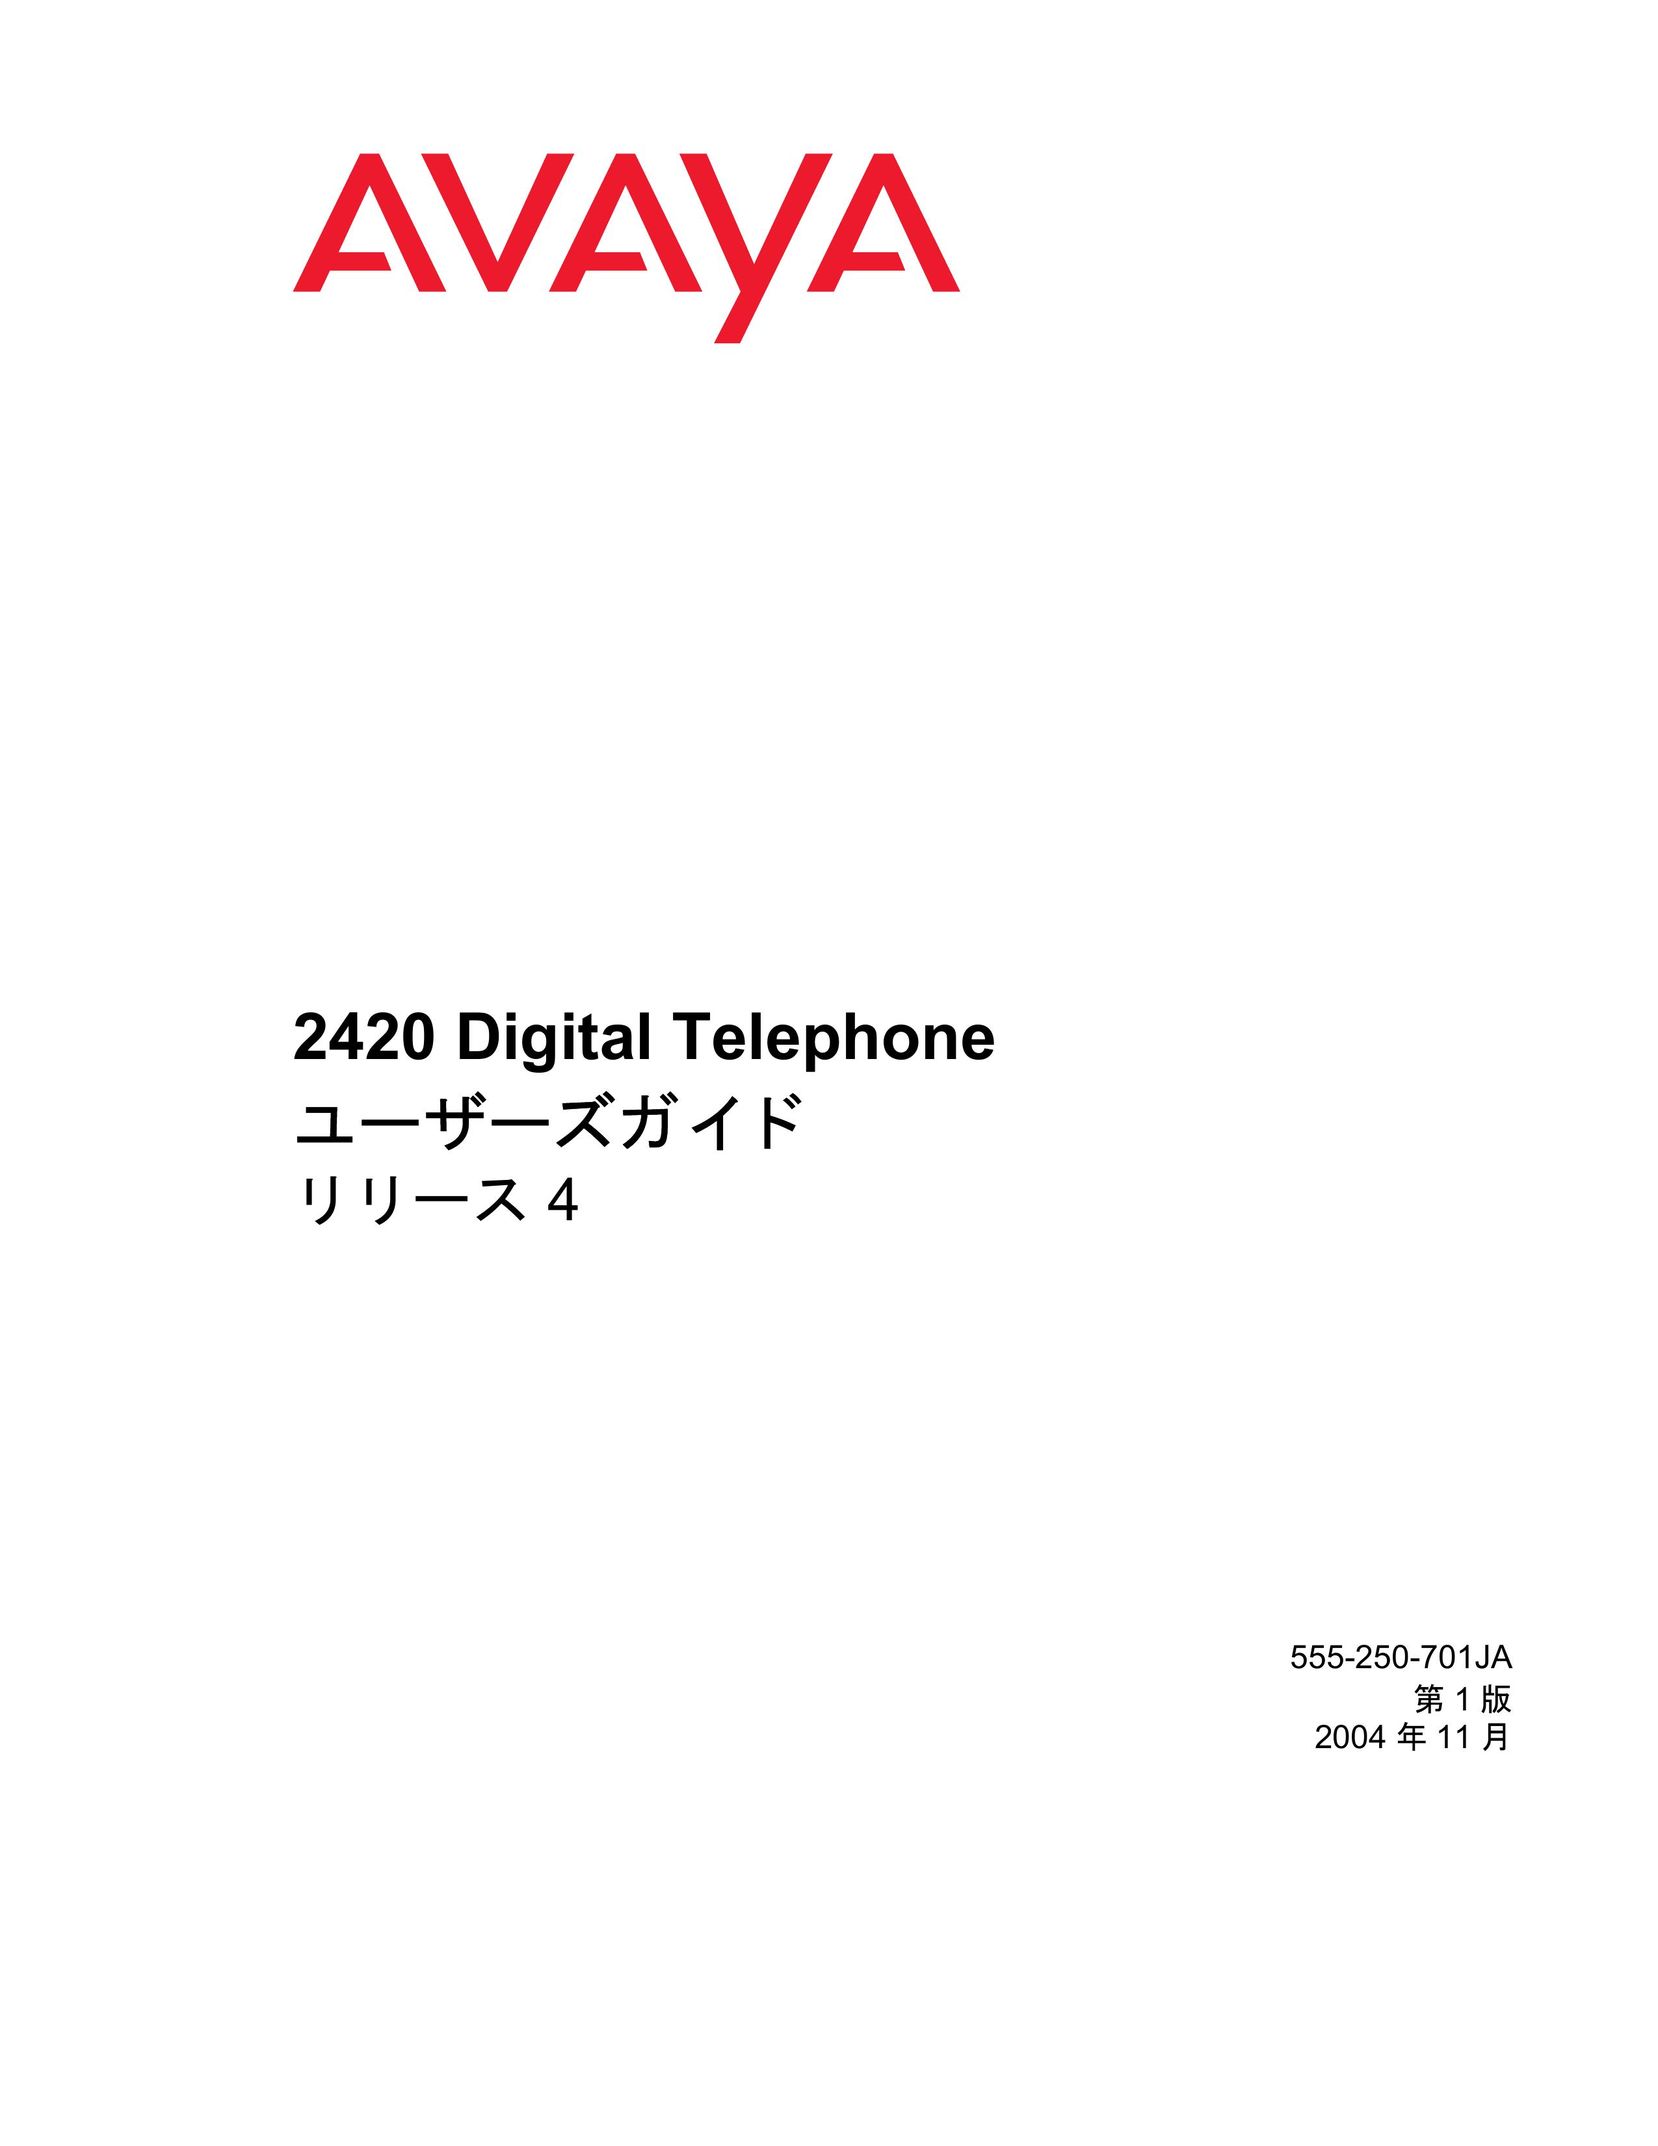 Avaya 2420 Cell Phone User Manual